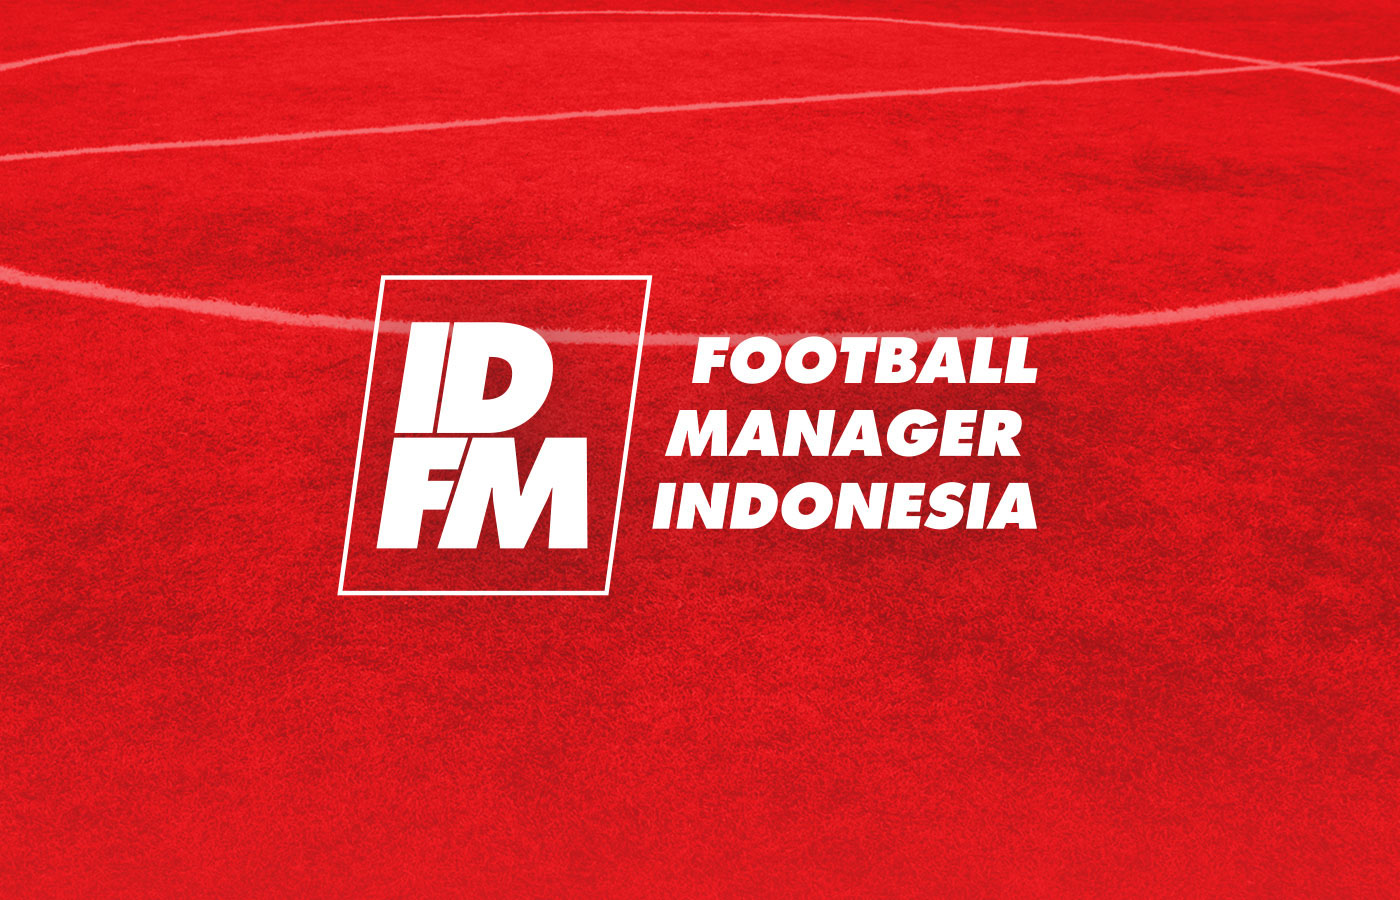 Football Manager FM indonesia roberto mancini Interior editorial magazine IDFM Sport Interactive minimalist one tuned monochrome football game